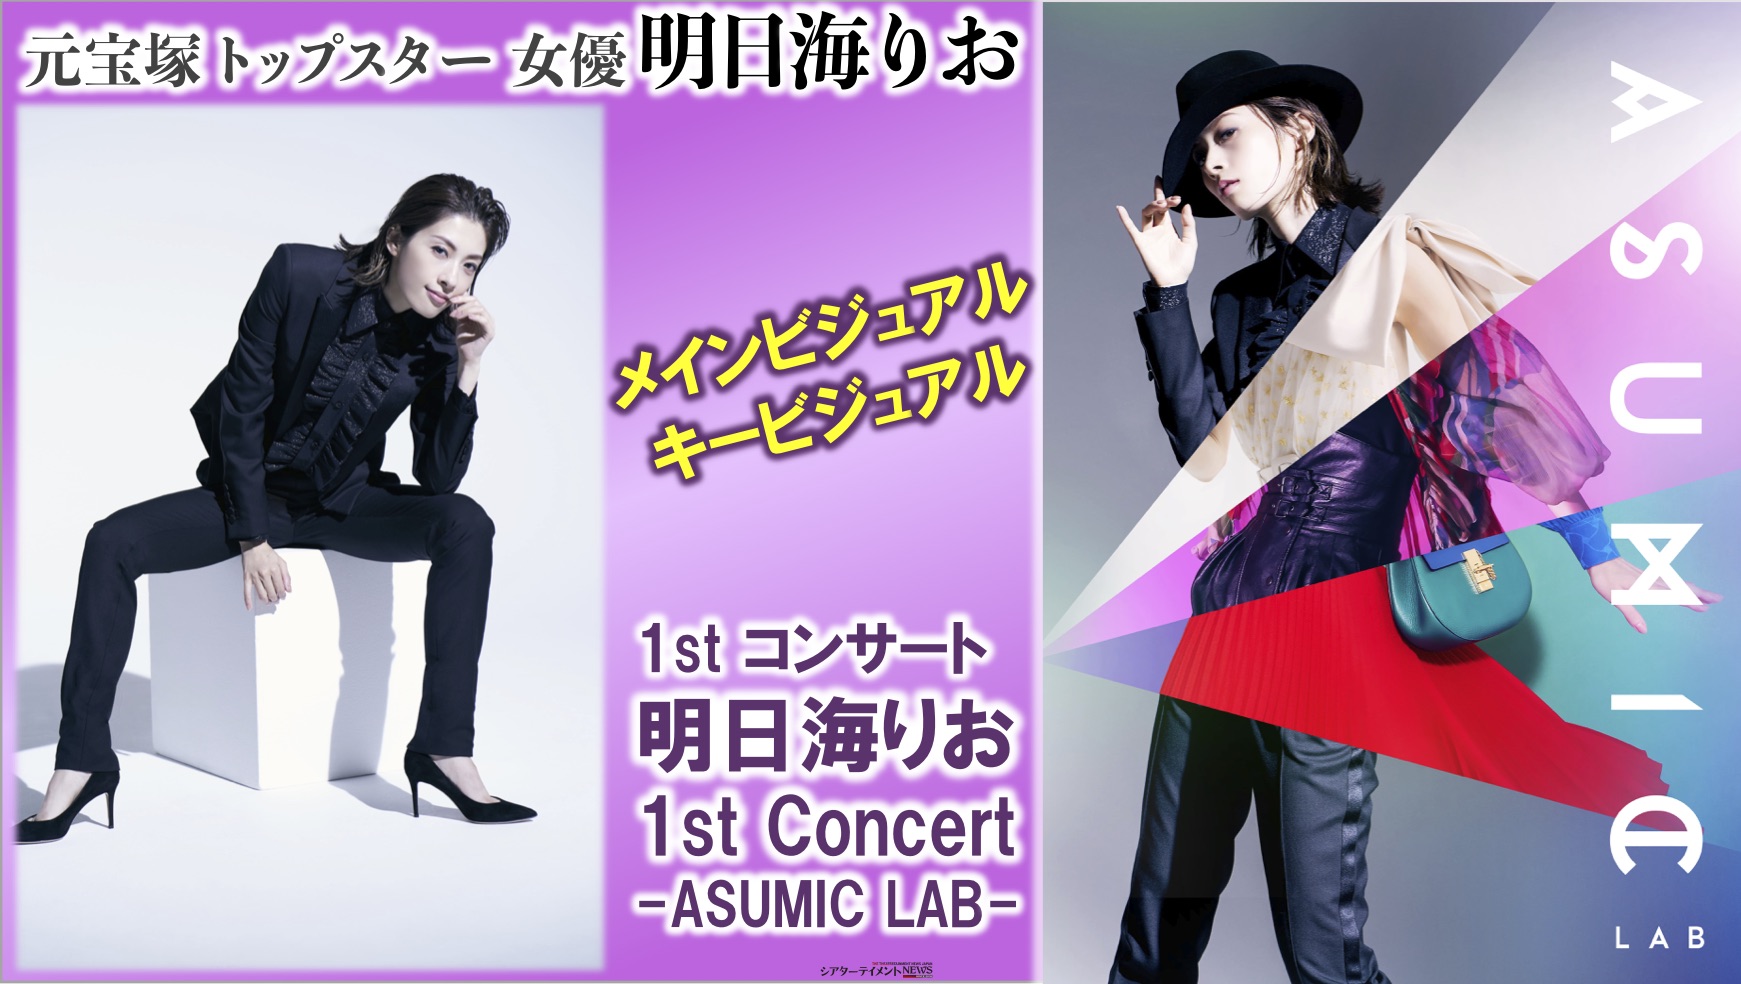 ASUMIC LAB 1st Concert 明日海りお Blu-ray - DVD/ブルーレイ